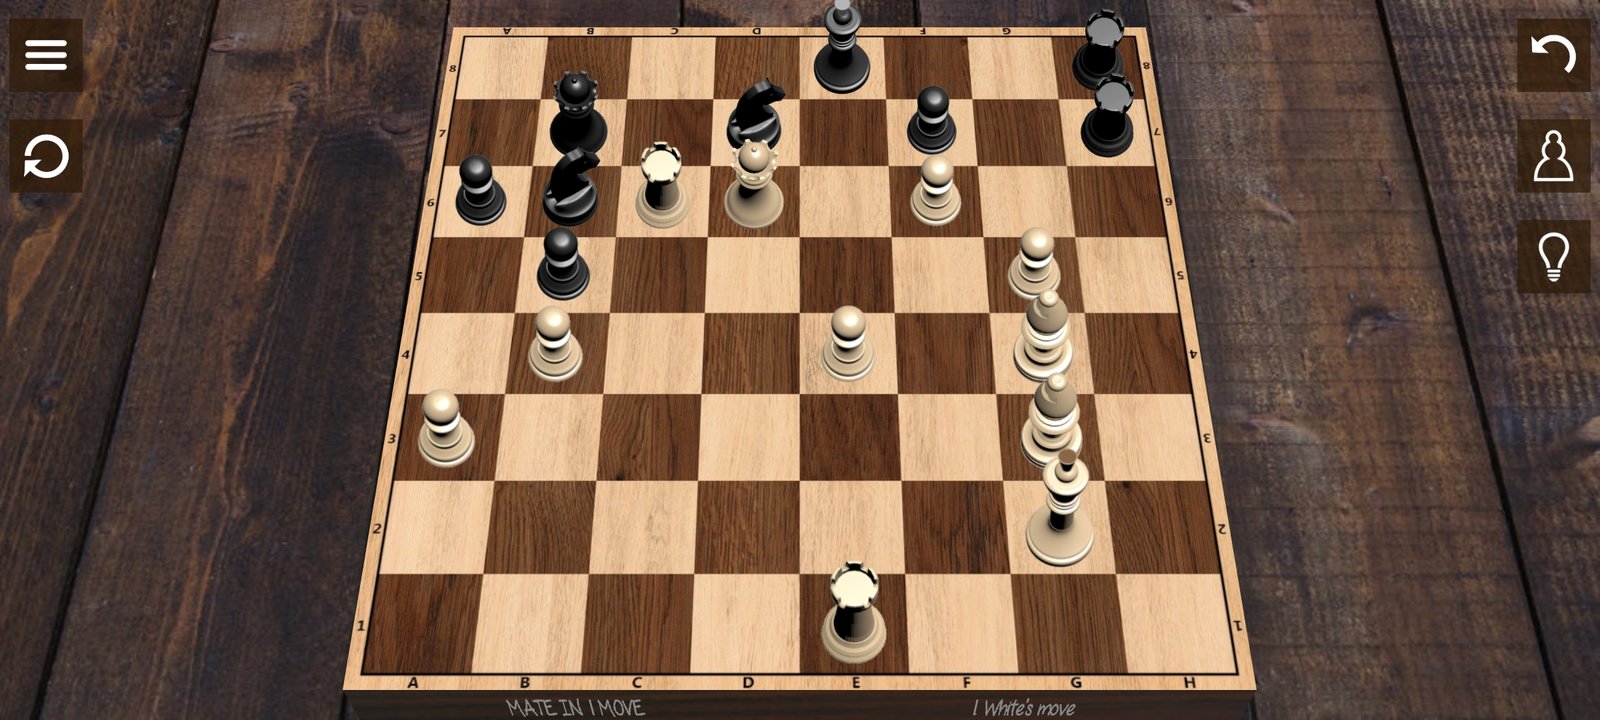 Auto Chess MOD APK v2.21.2 (Unlocked) - Moddroid